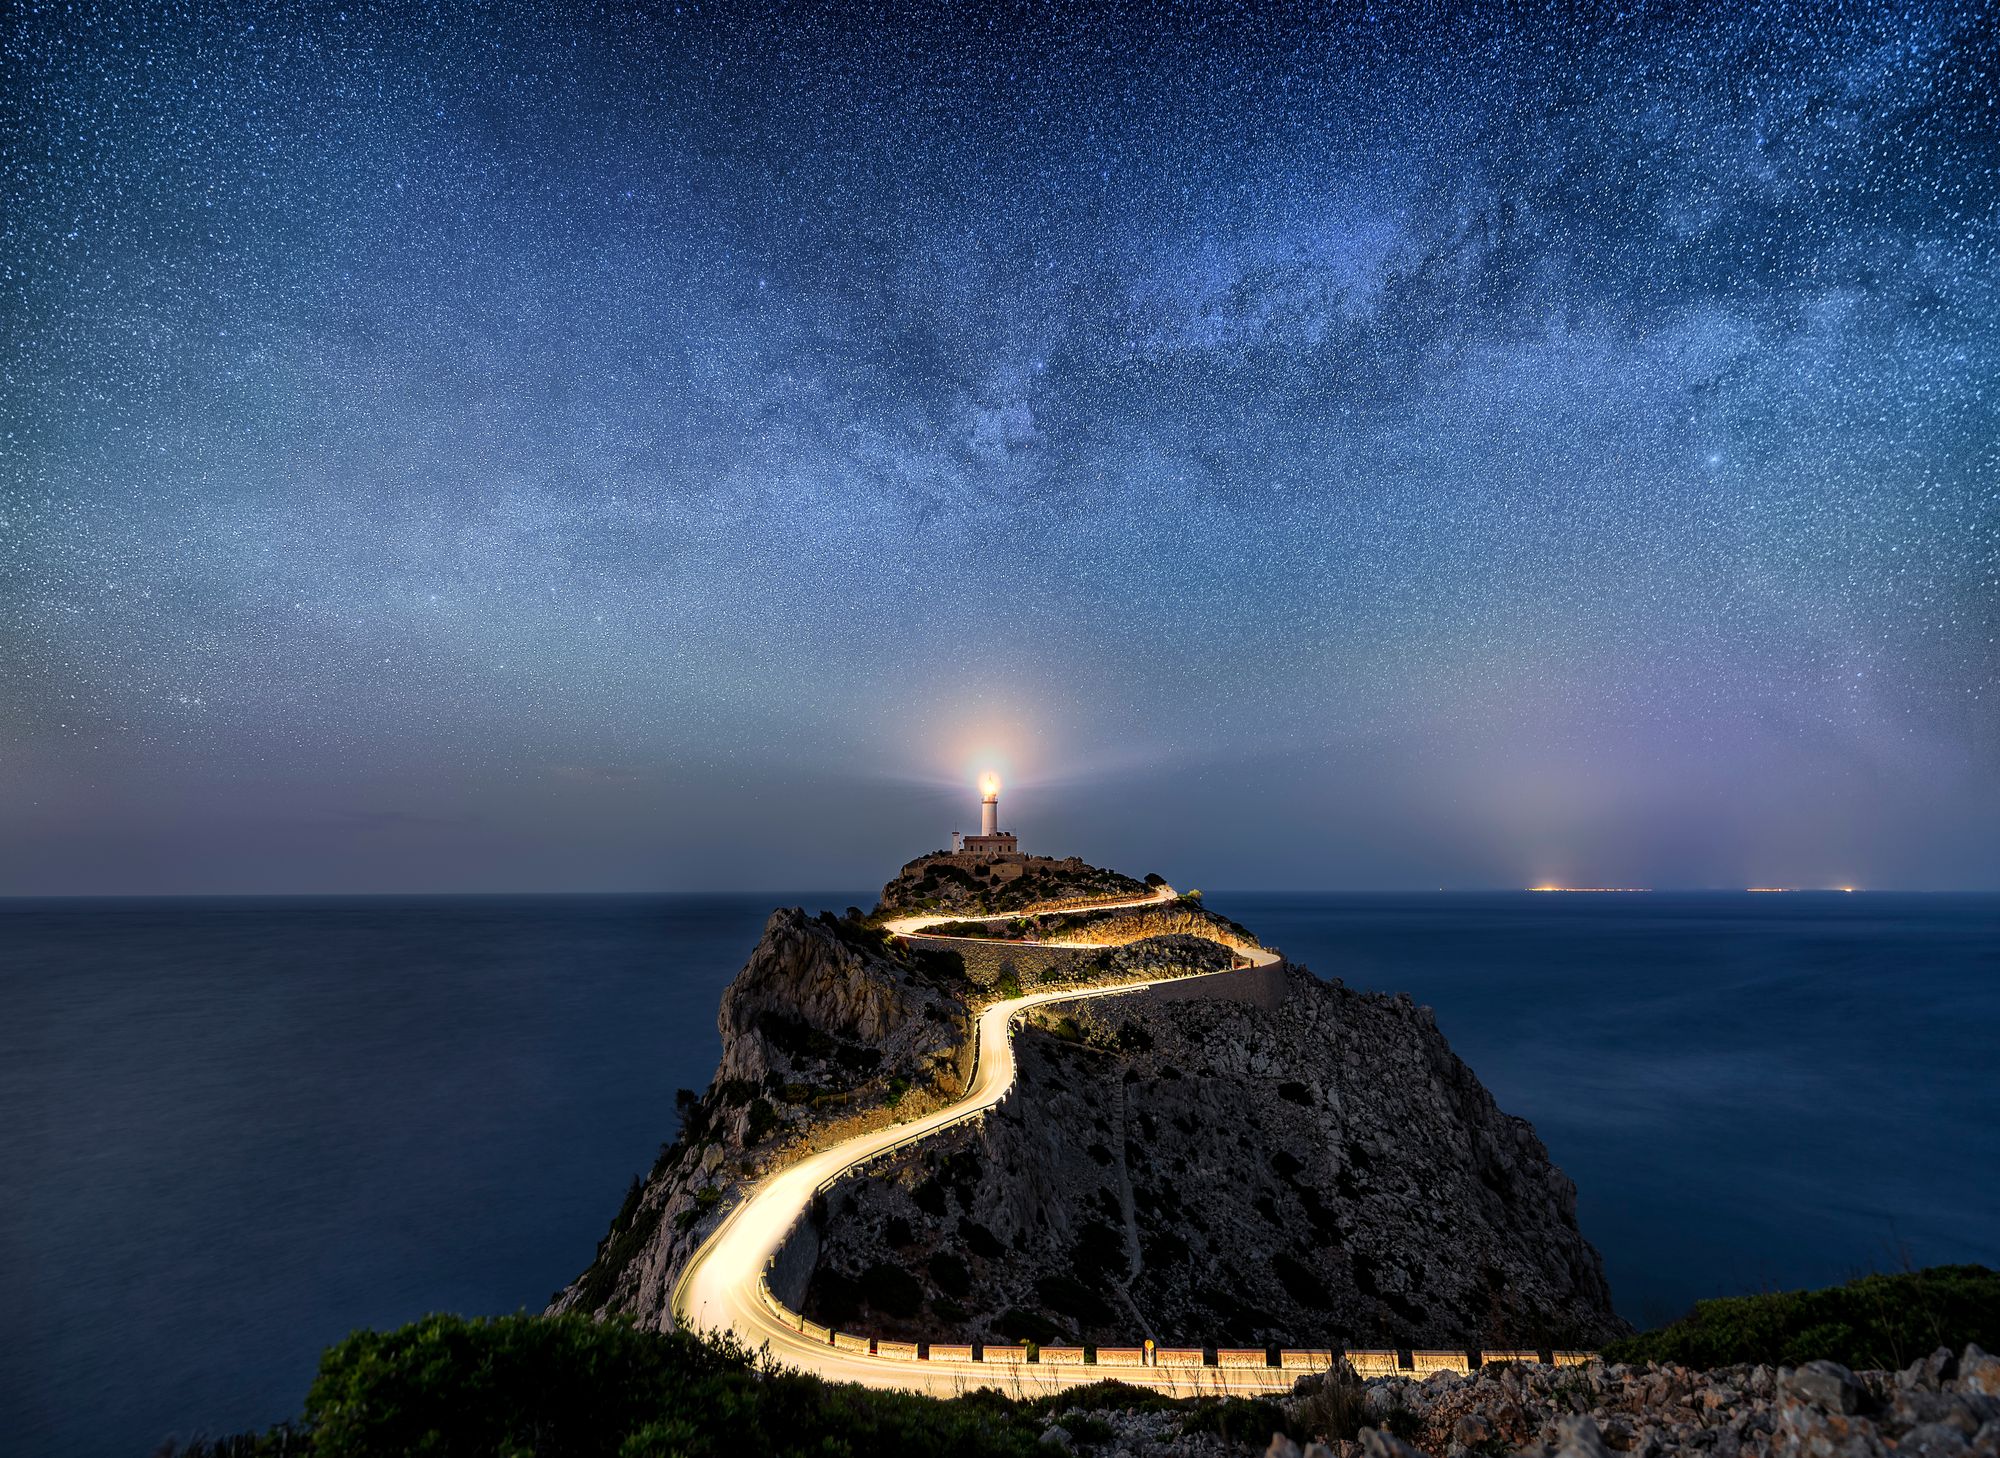 Lighthouse with an illuminated path.